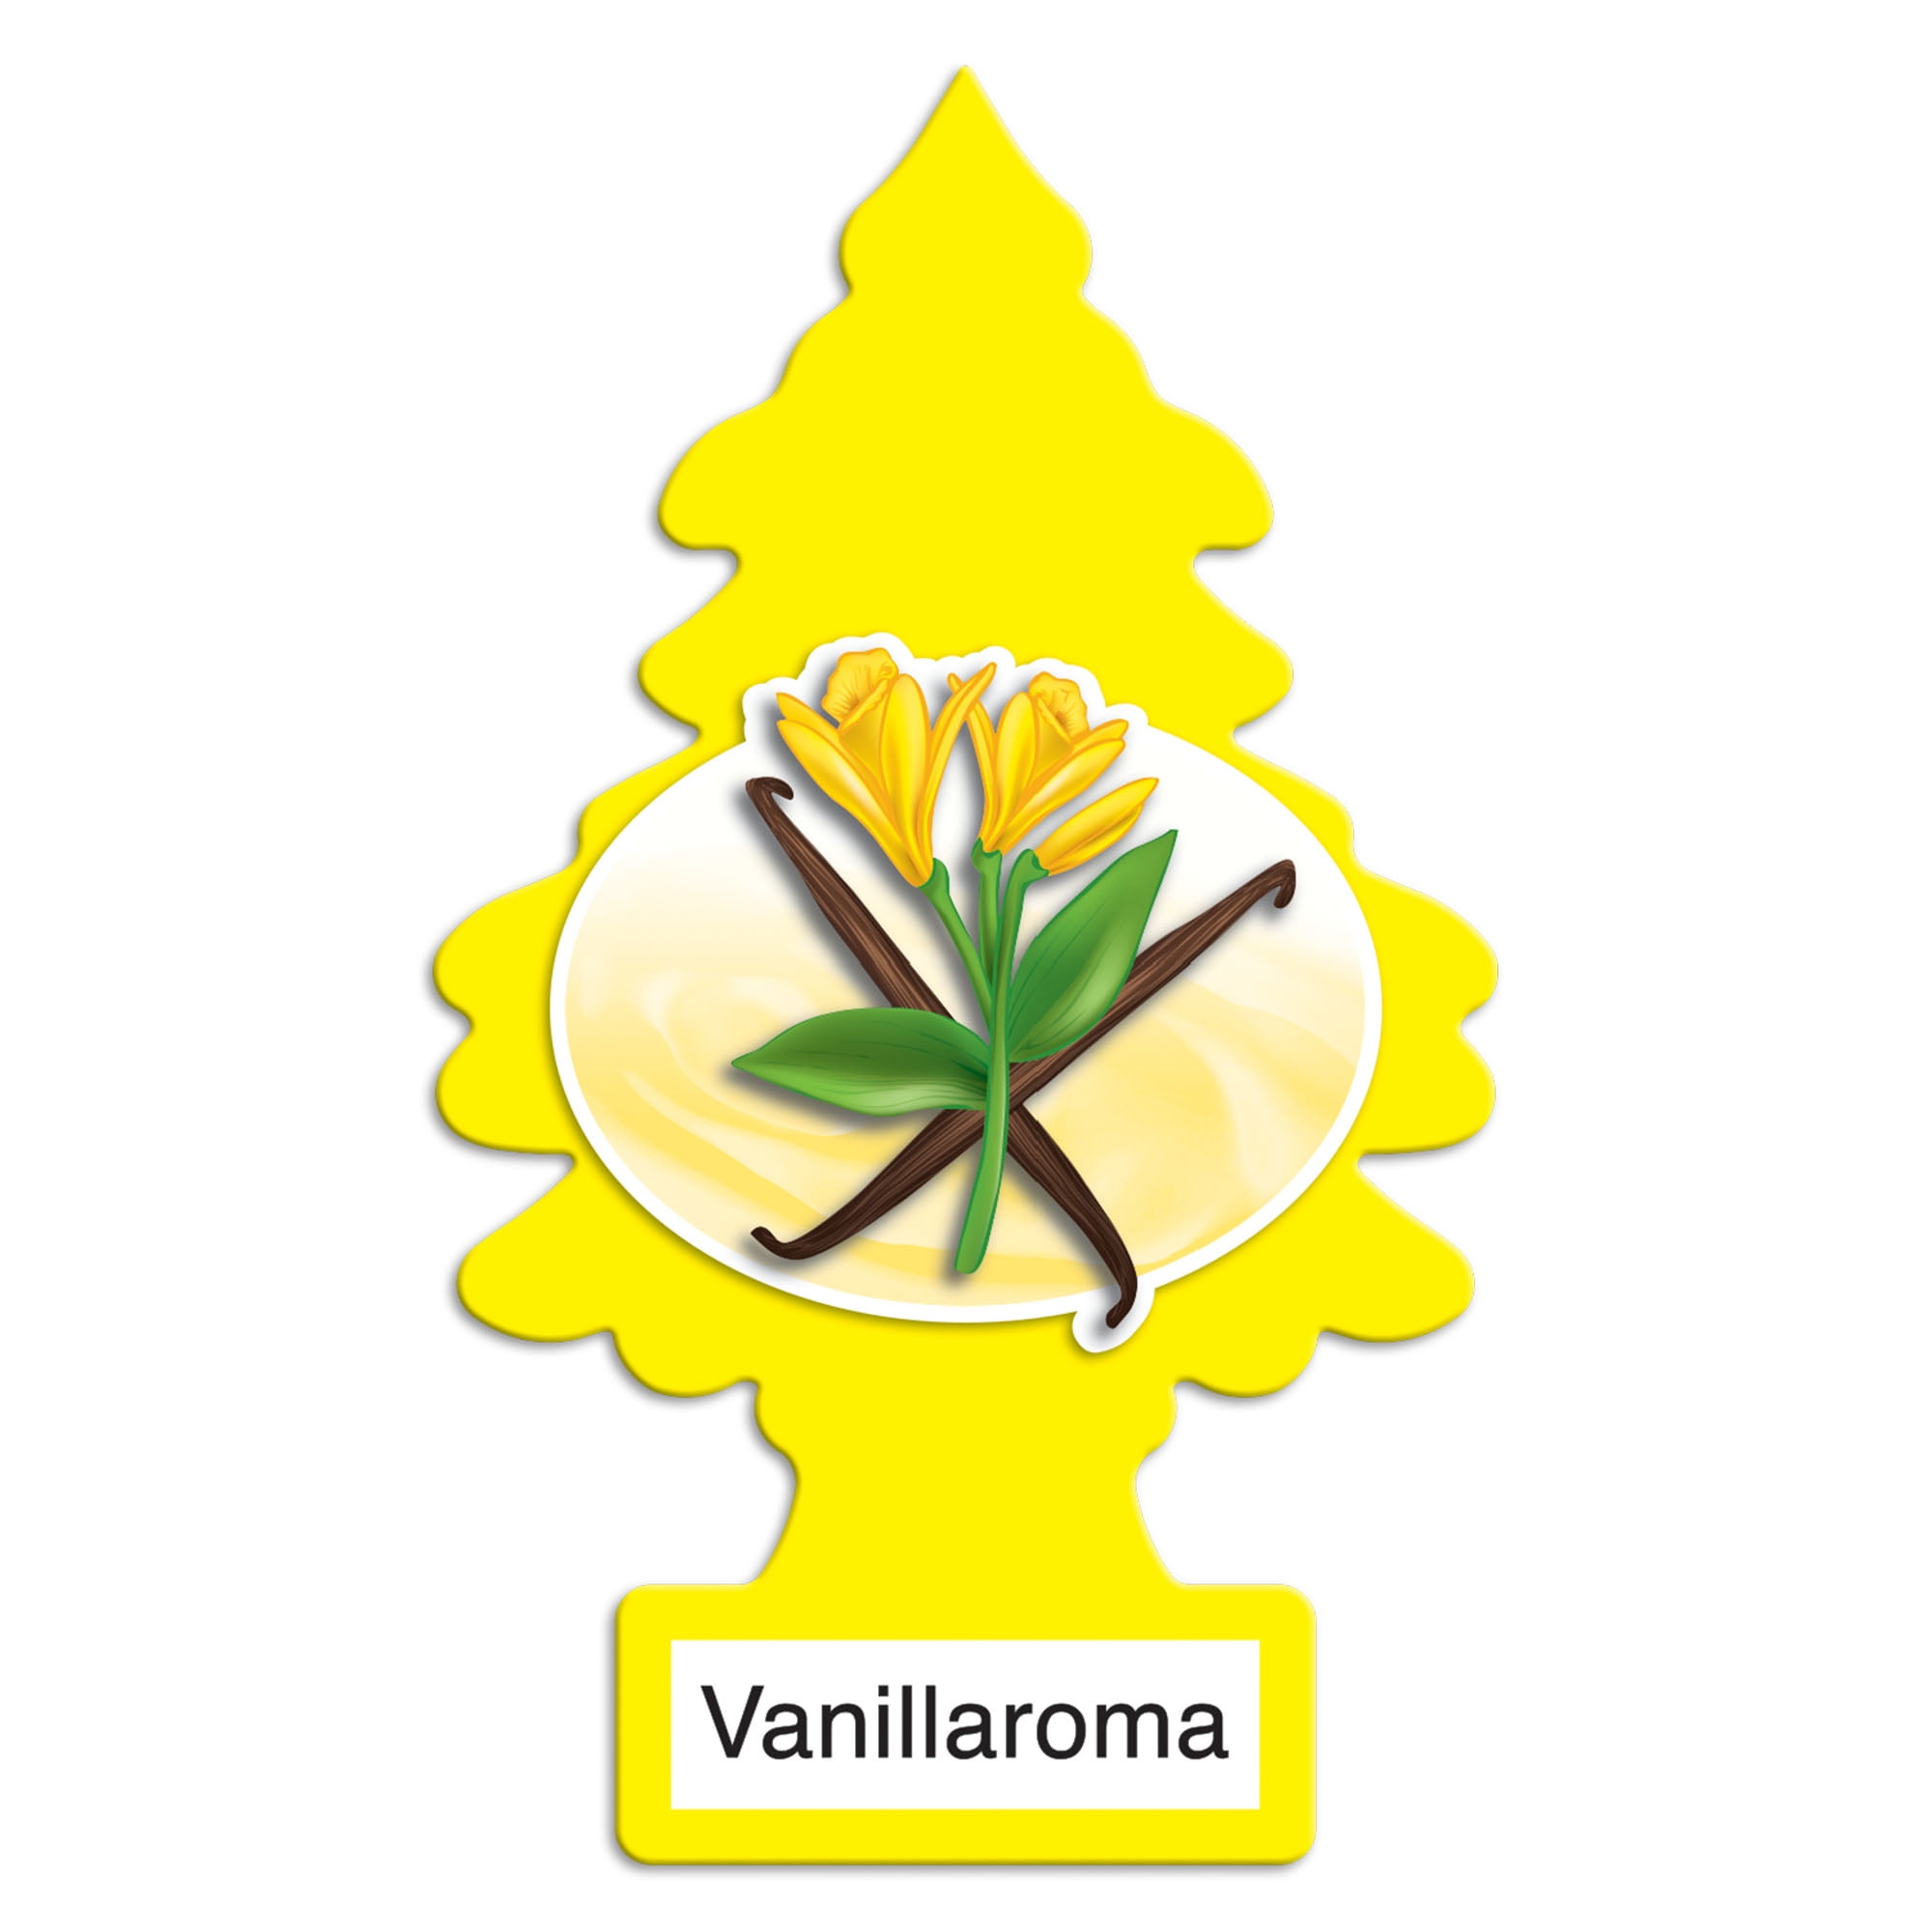 Little Trees Vanillaroma Air Freshener 6pk : Target